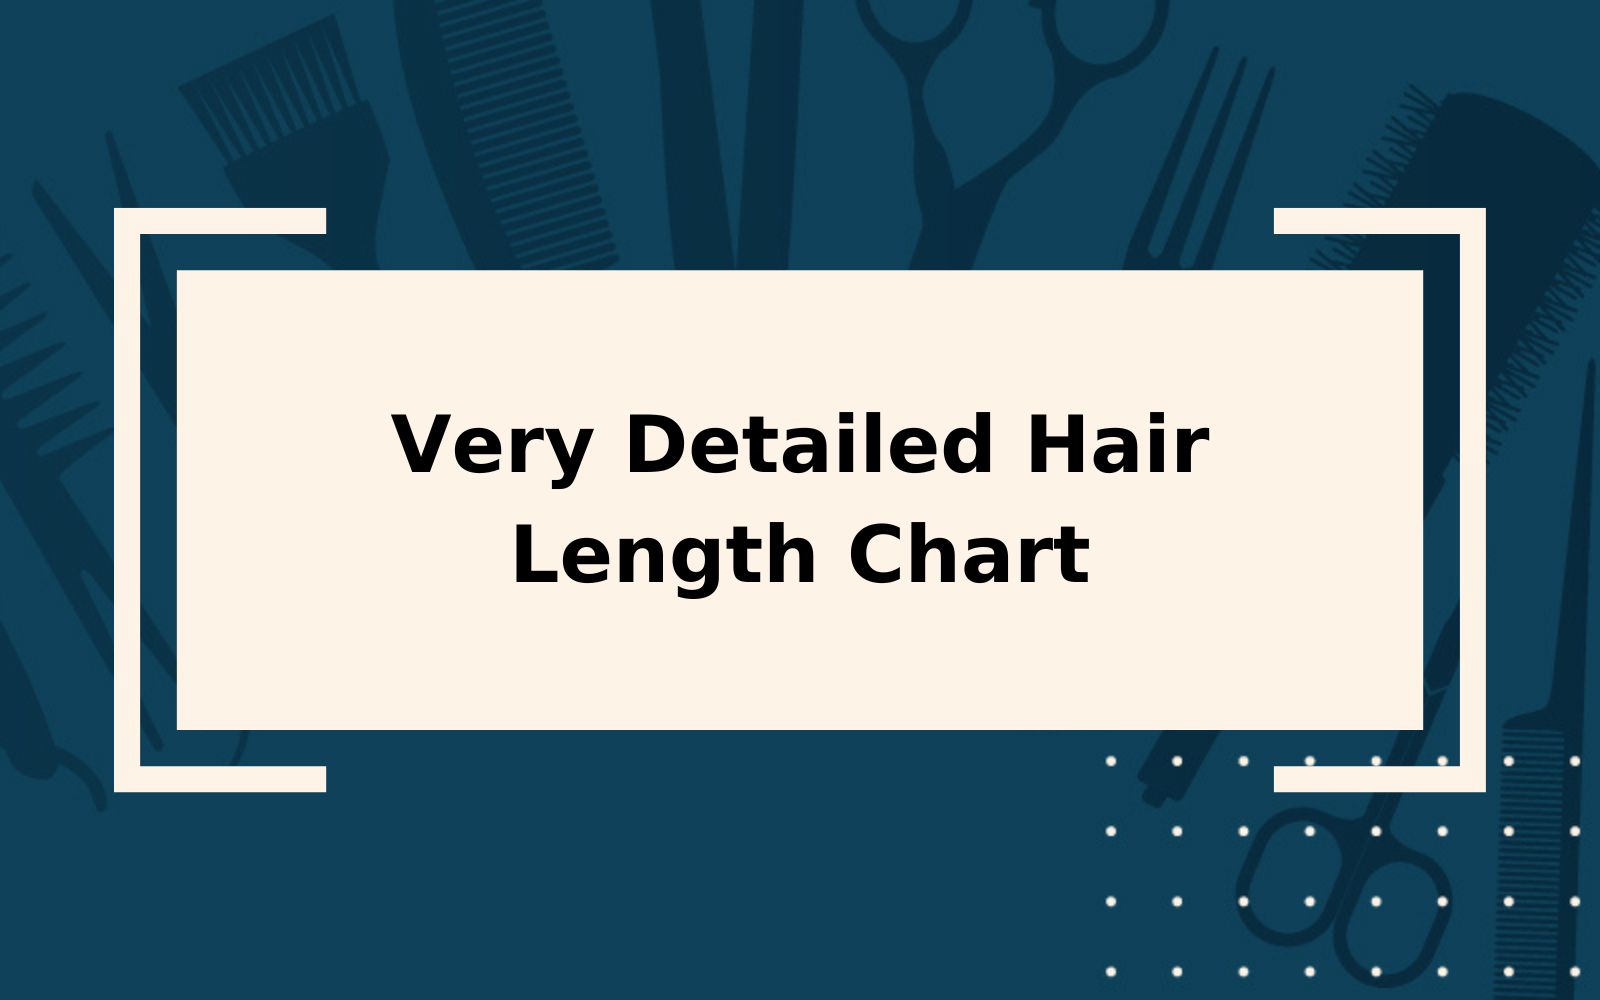 Detailed Hair Length Chart | Visual Guide & Descriptions